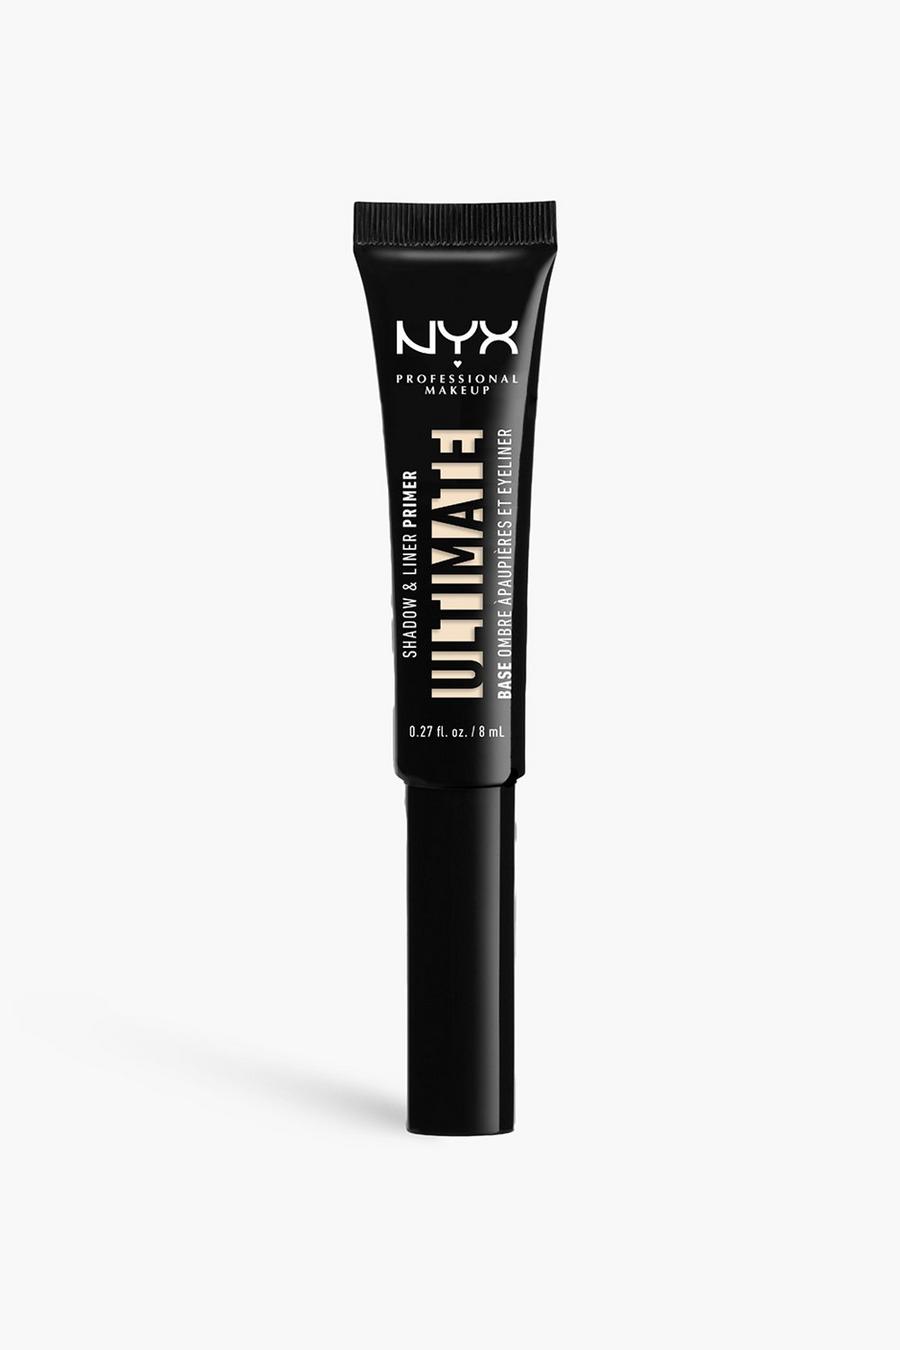 Base pre maquillaje para los párpados con vitamina E Ultimate Shadow and Liner Primer de NYX Professional Makeup, 01 light